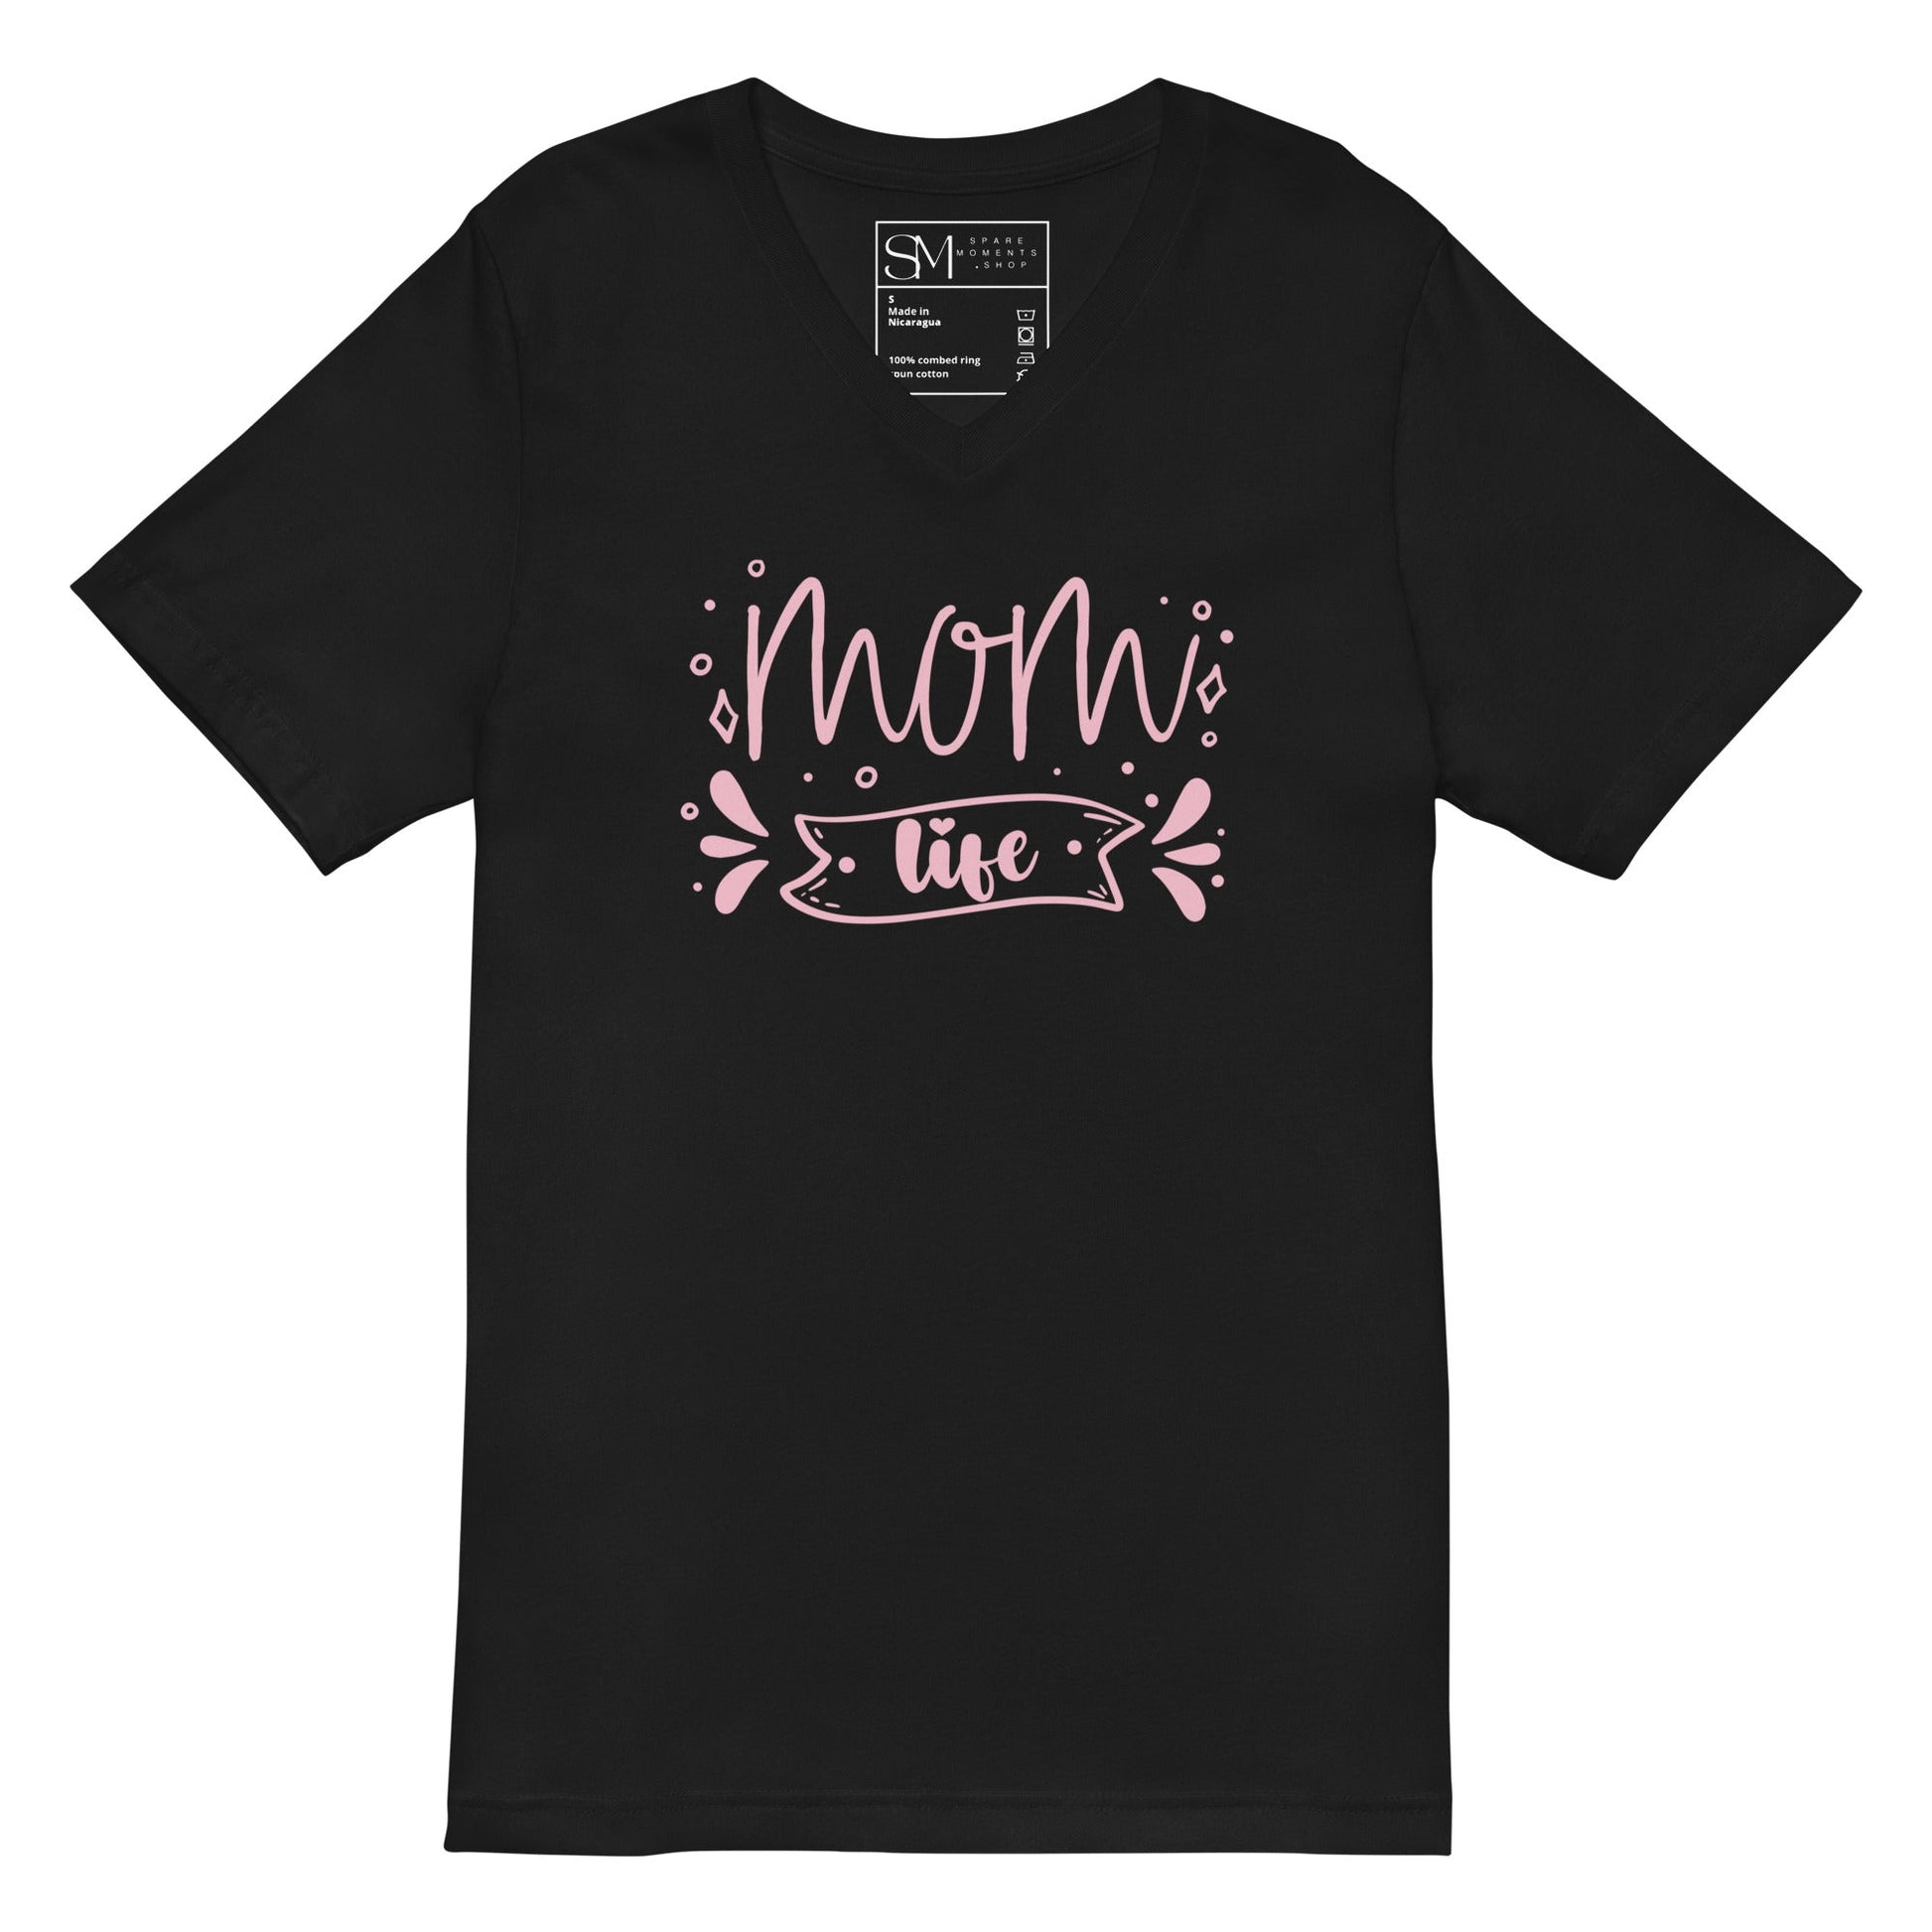 Mom Life | Unisex Short Sleeve V - Neck T - Shirt